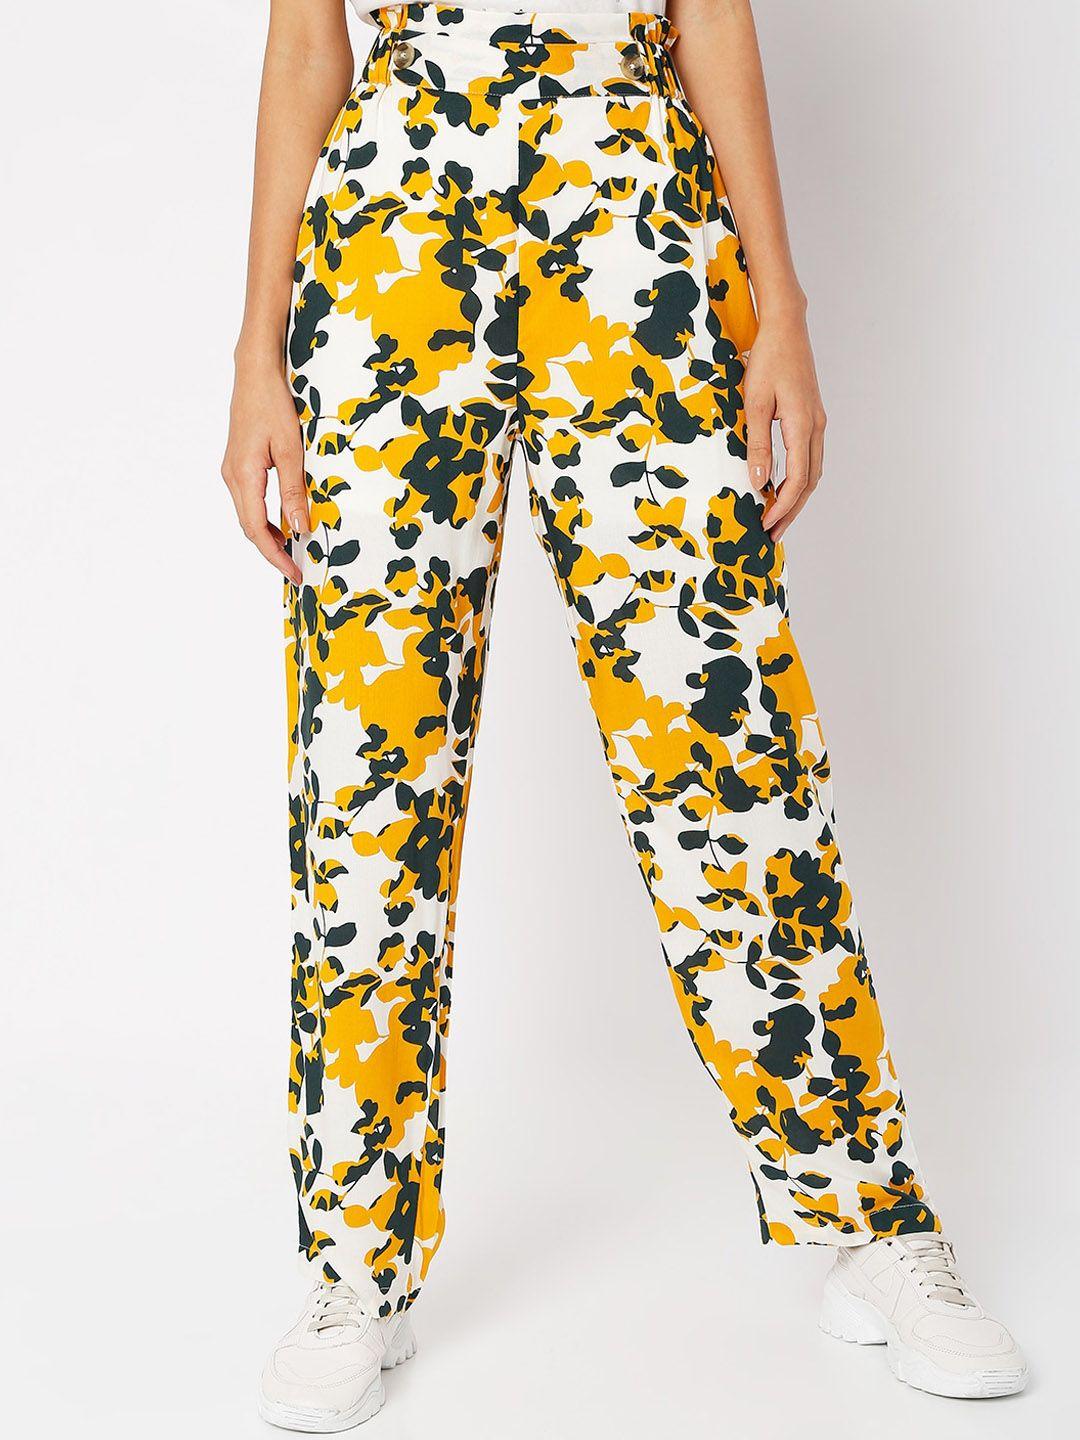 vero moda women yellow floral printed high-rise trousers